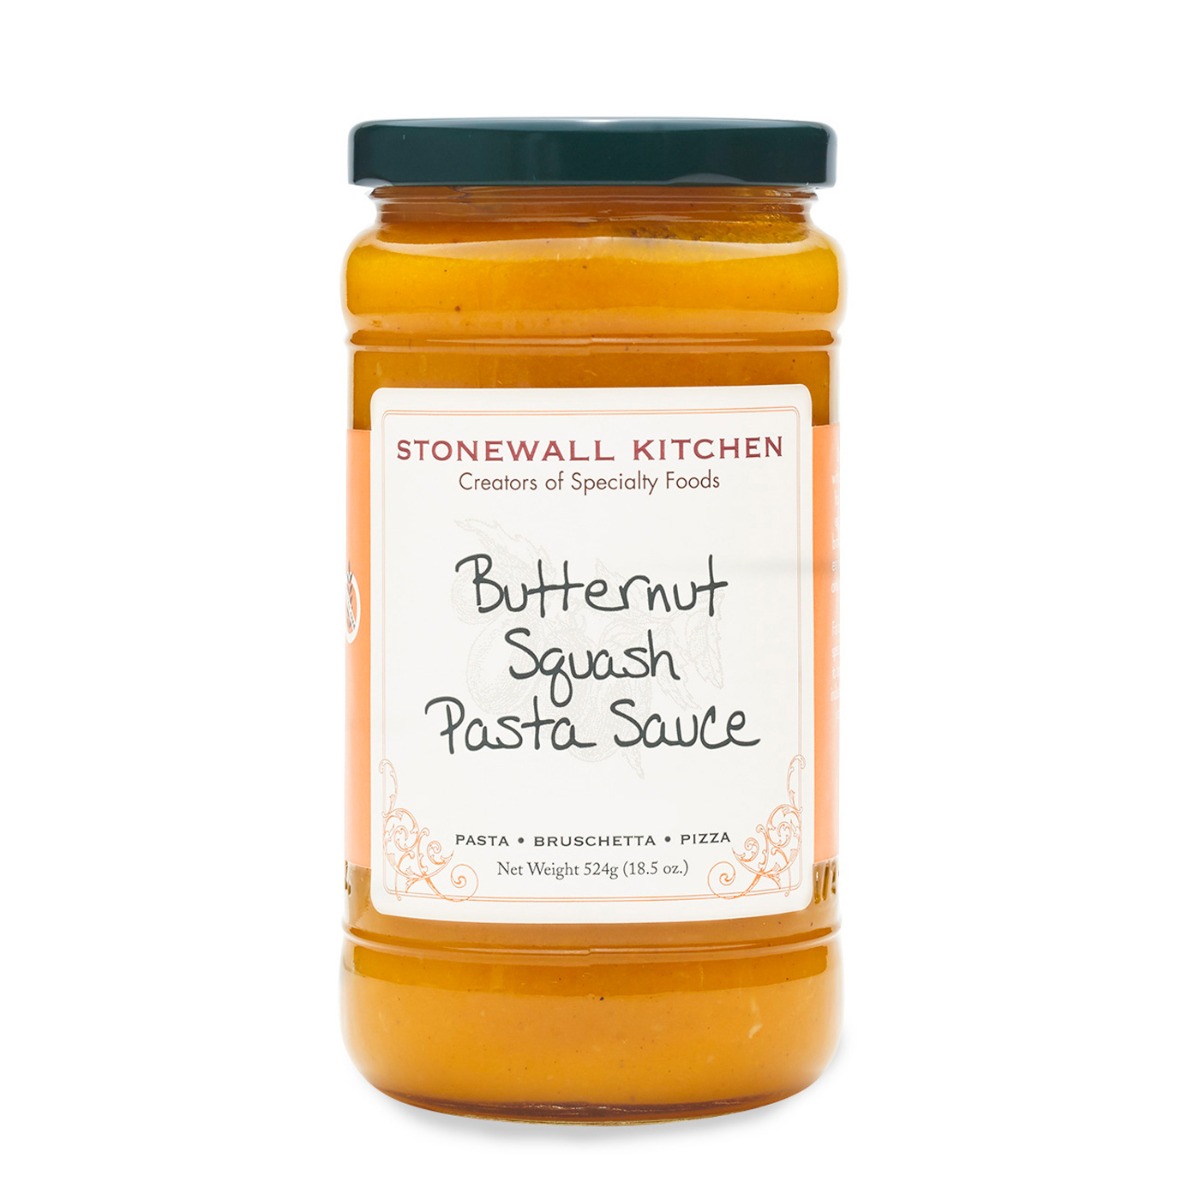 STONEWALL KITCHEN: Butternut Squash Pasta Sauce, 18.5 oz - 0711381321072